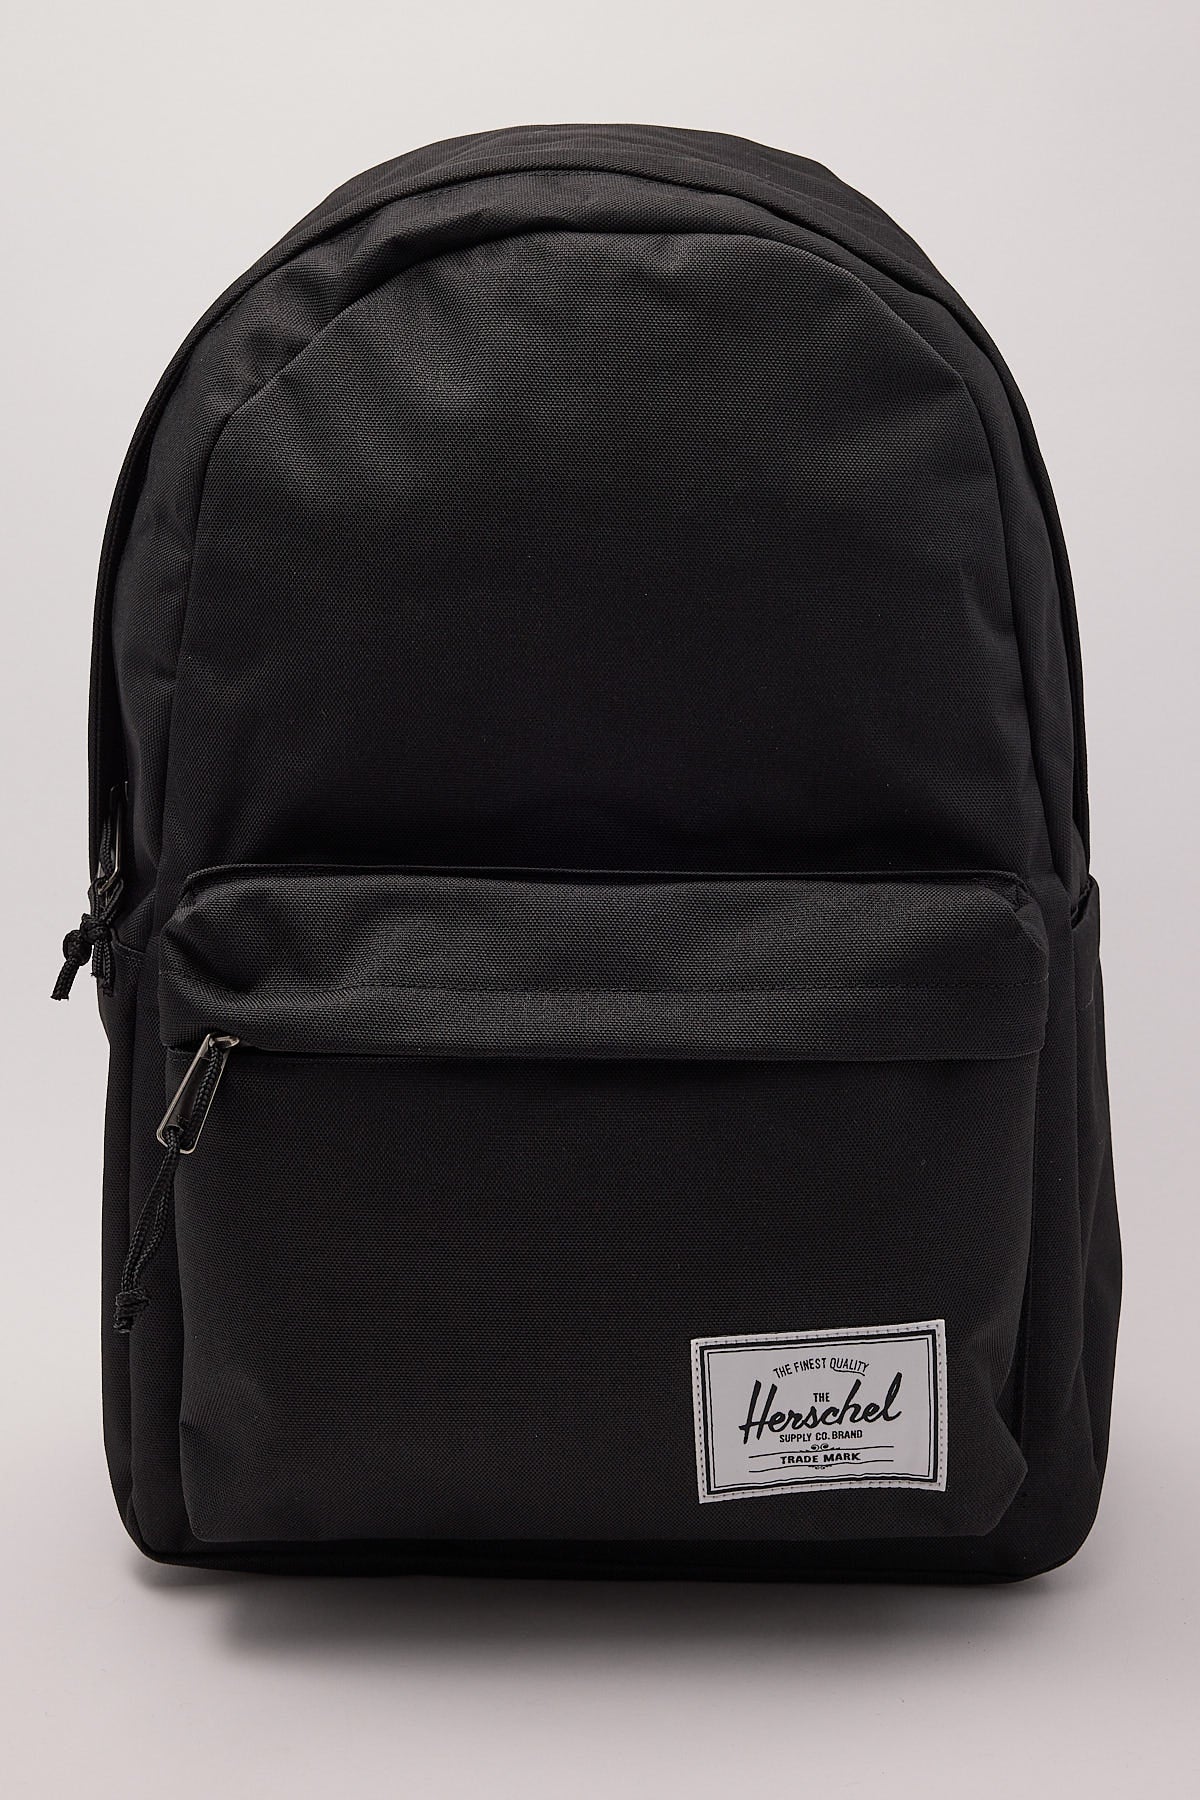 Herschel Supply Co. Classic XL Backpack Black